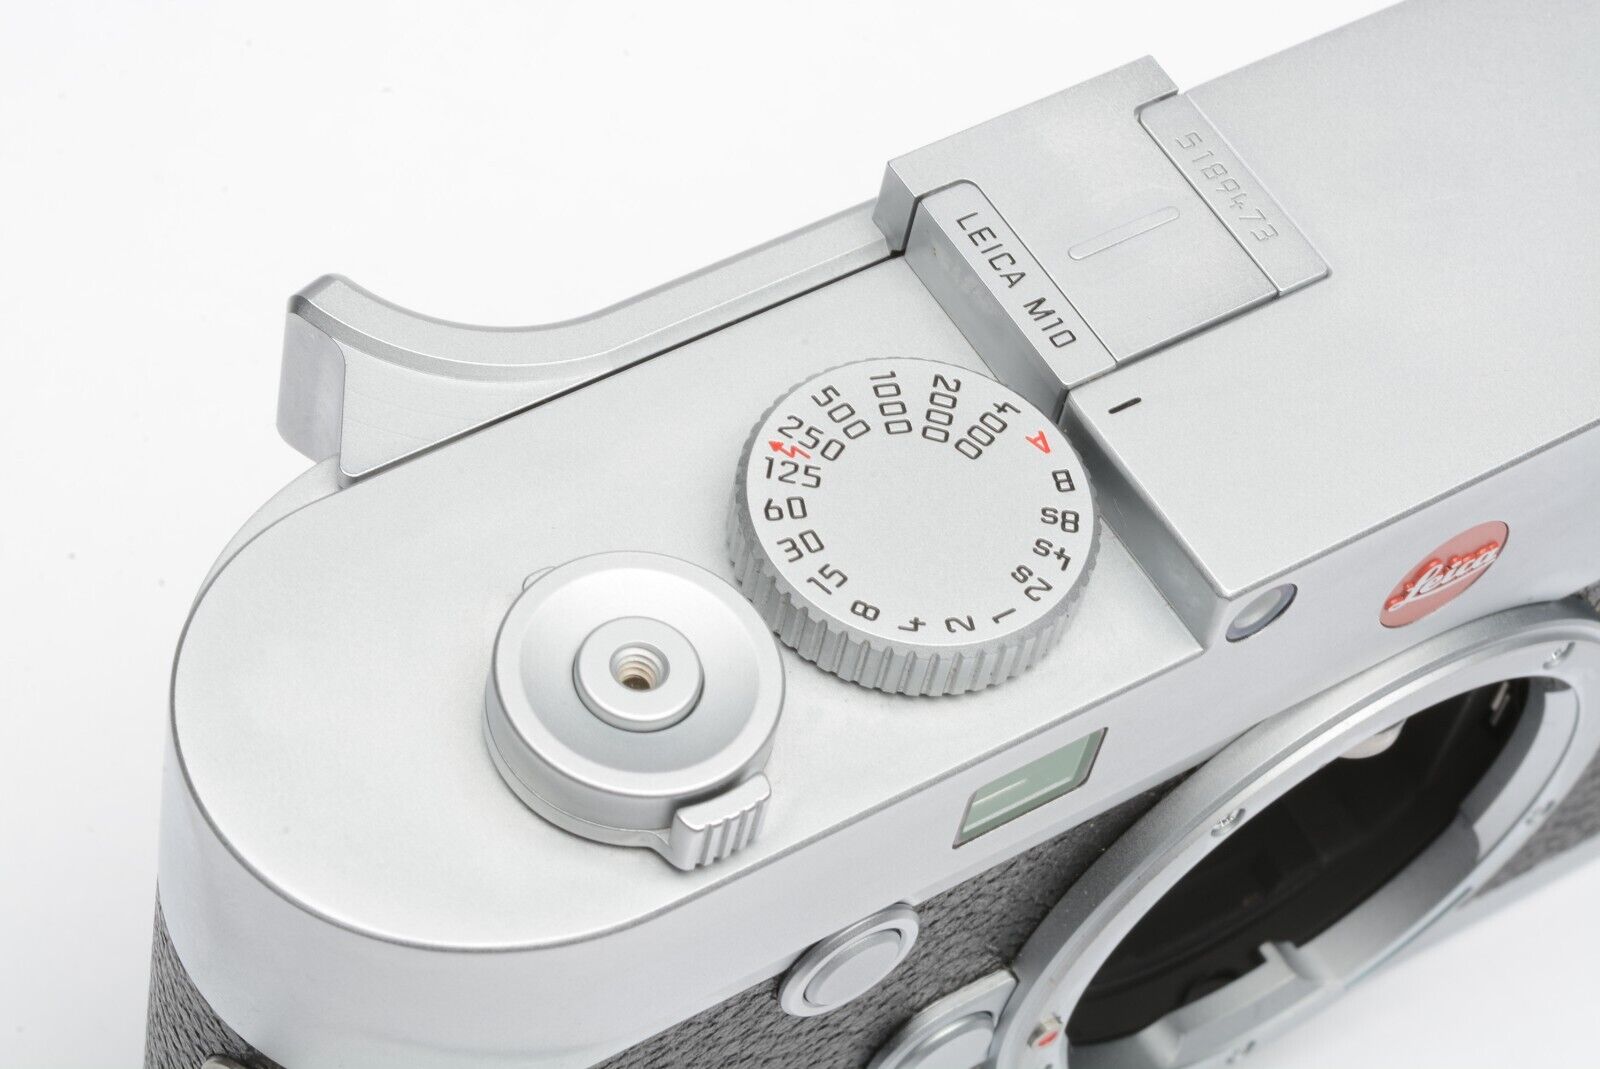  Leica M10 Digital Rangefinder Camera (Silver